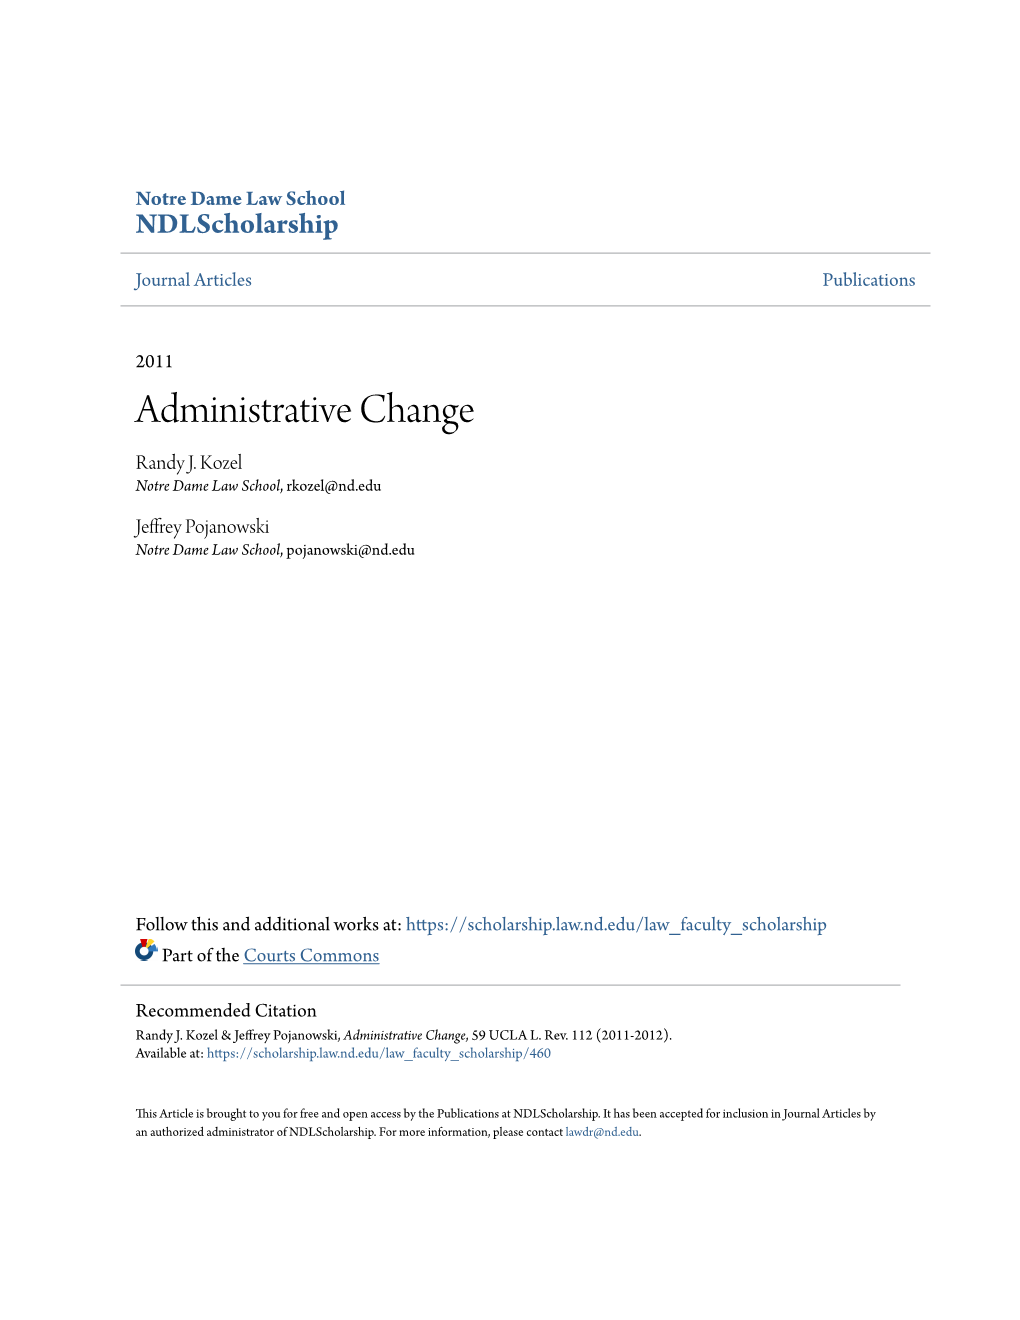 Administrative Change Randy J